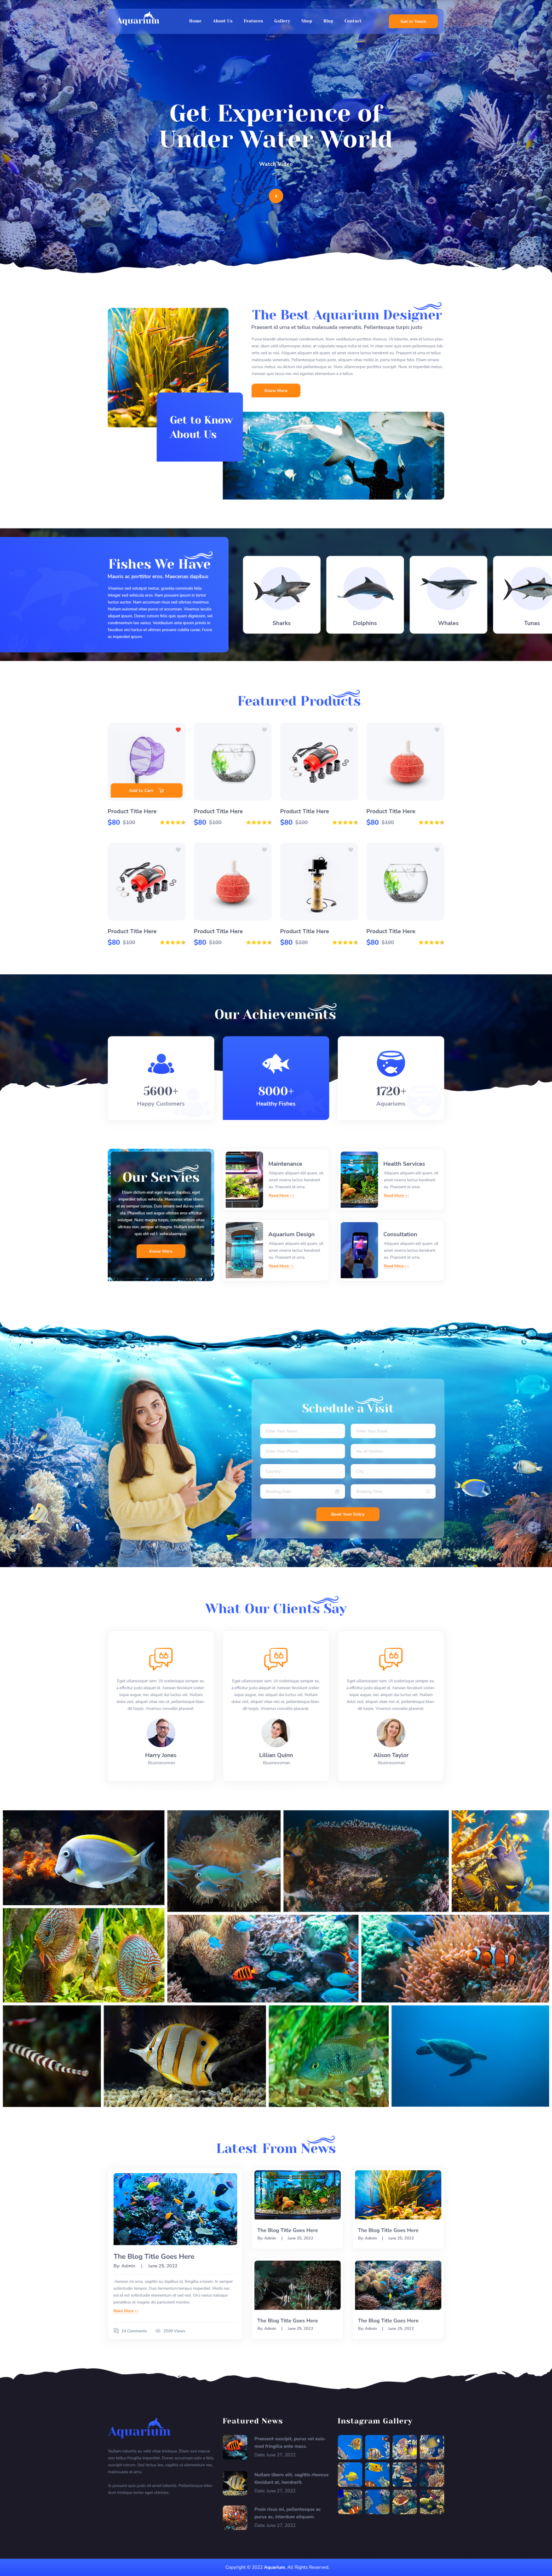 Aquarium WordPress Theme